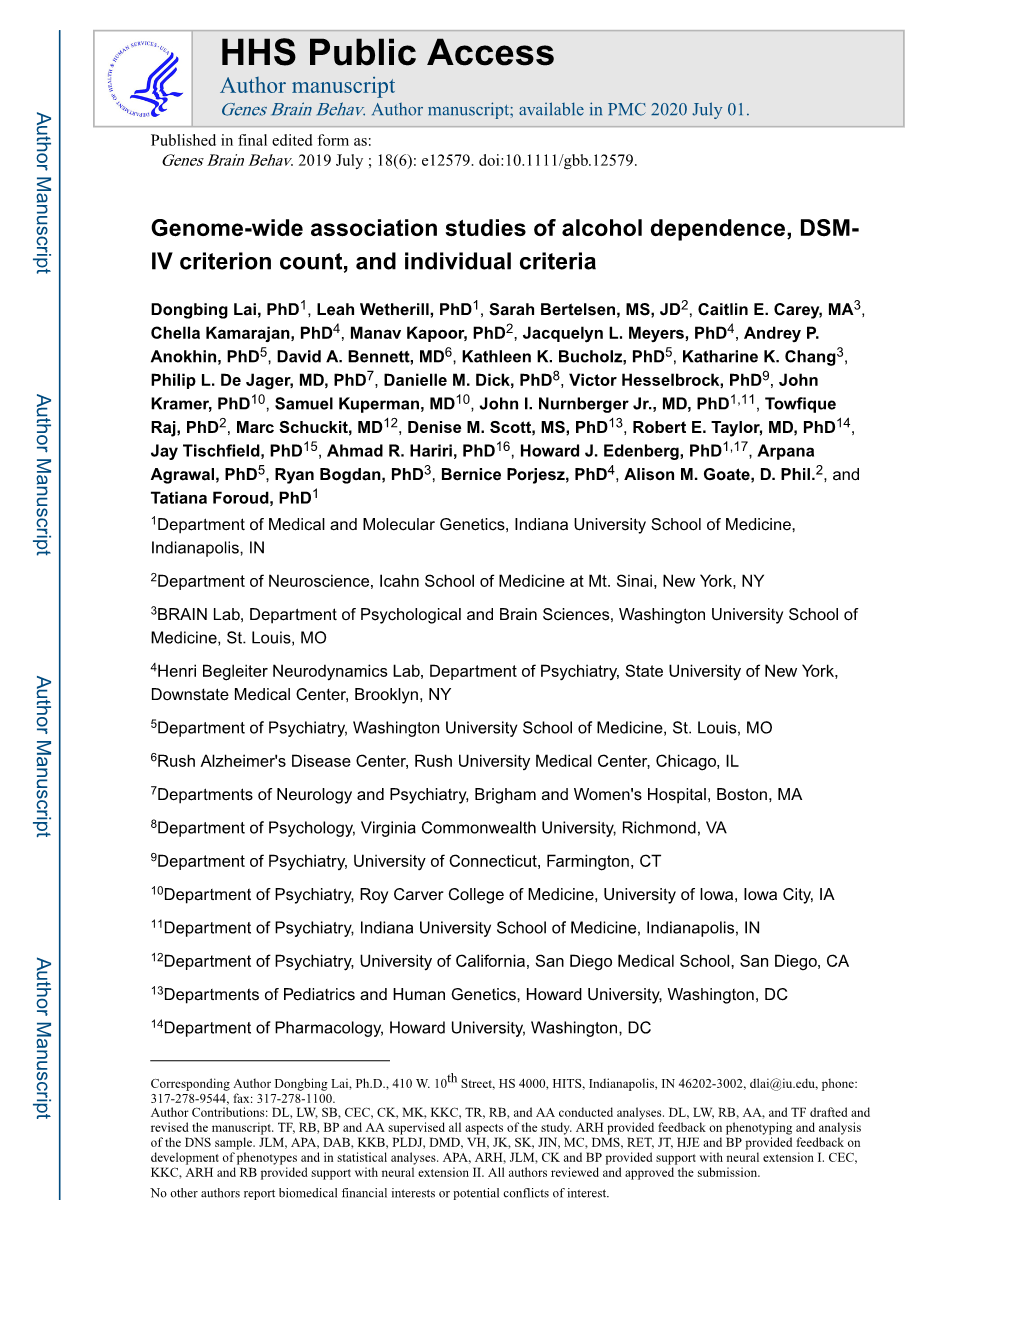 Genome-Wide Association Studies of Alcohol Dependence, DSM-IV